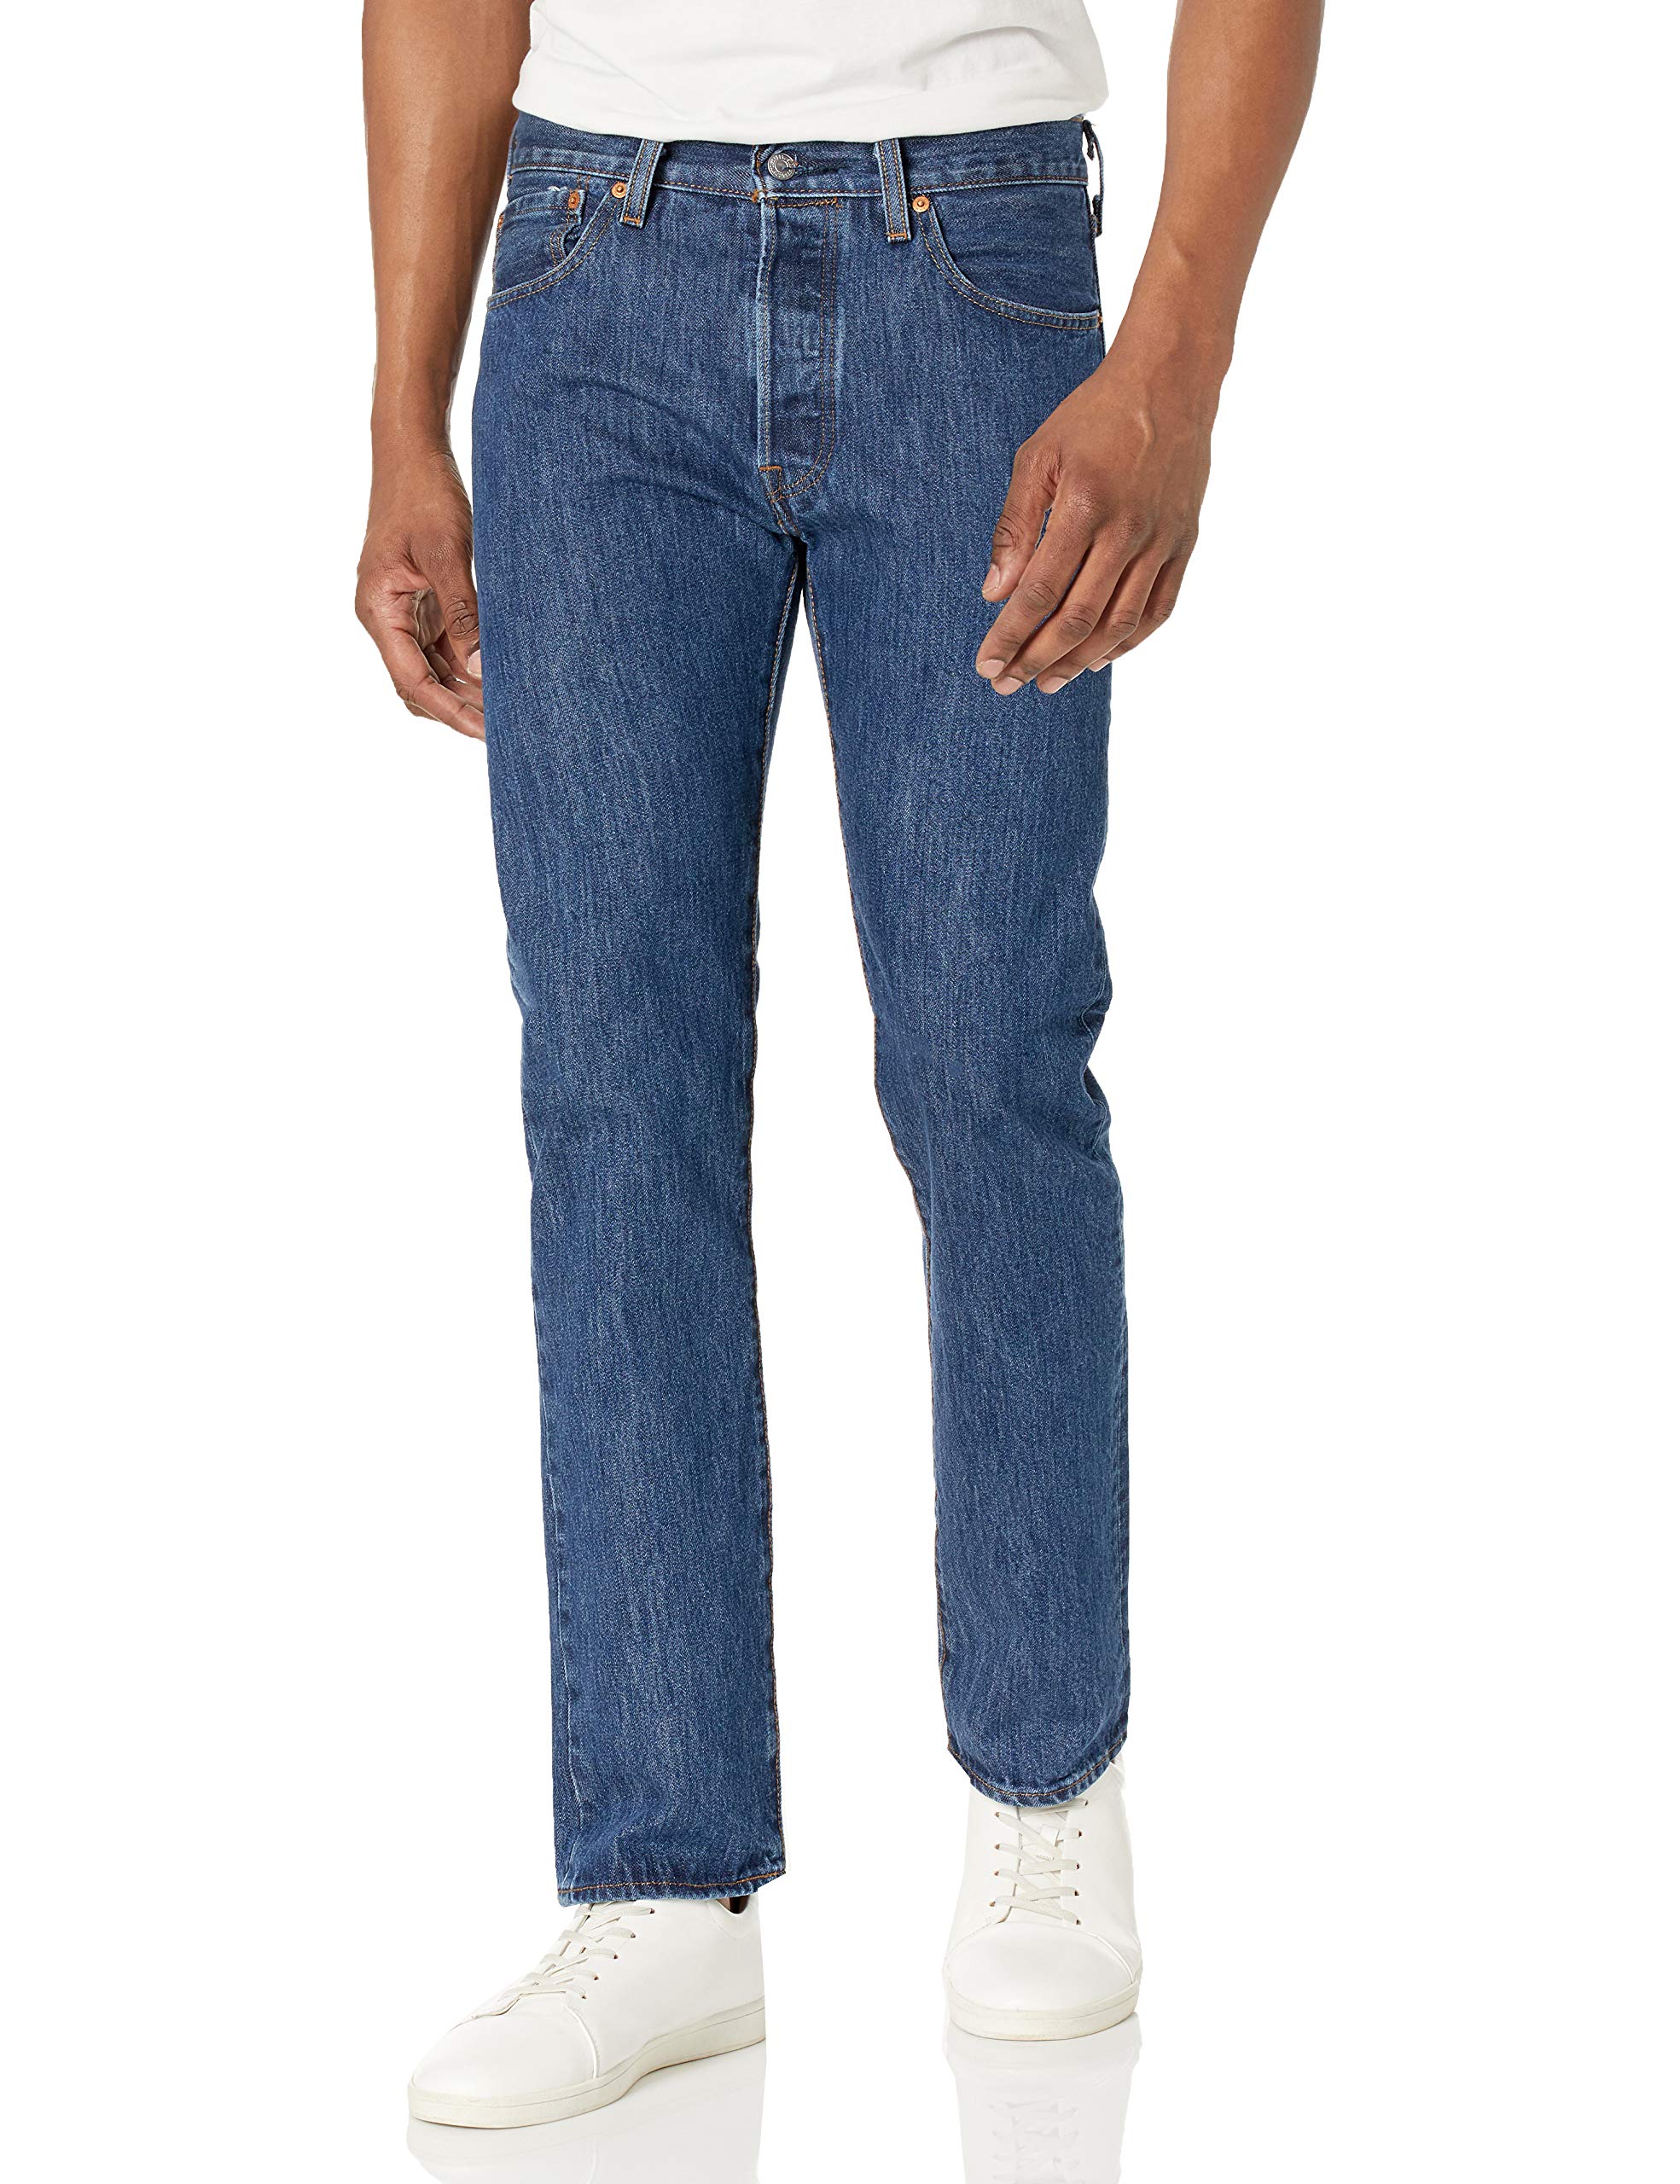 Levi's Men's 501 Original Fit Jeans (Seasonal)